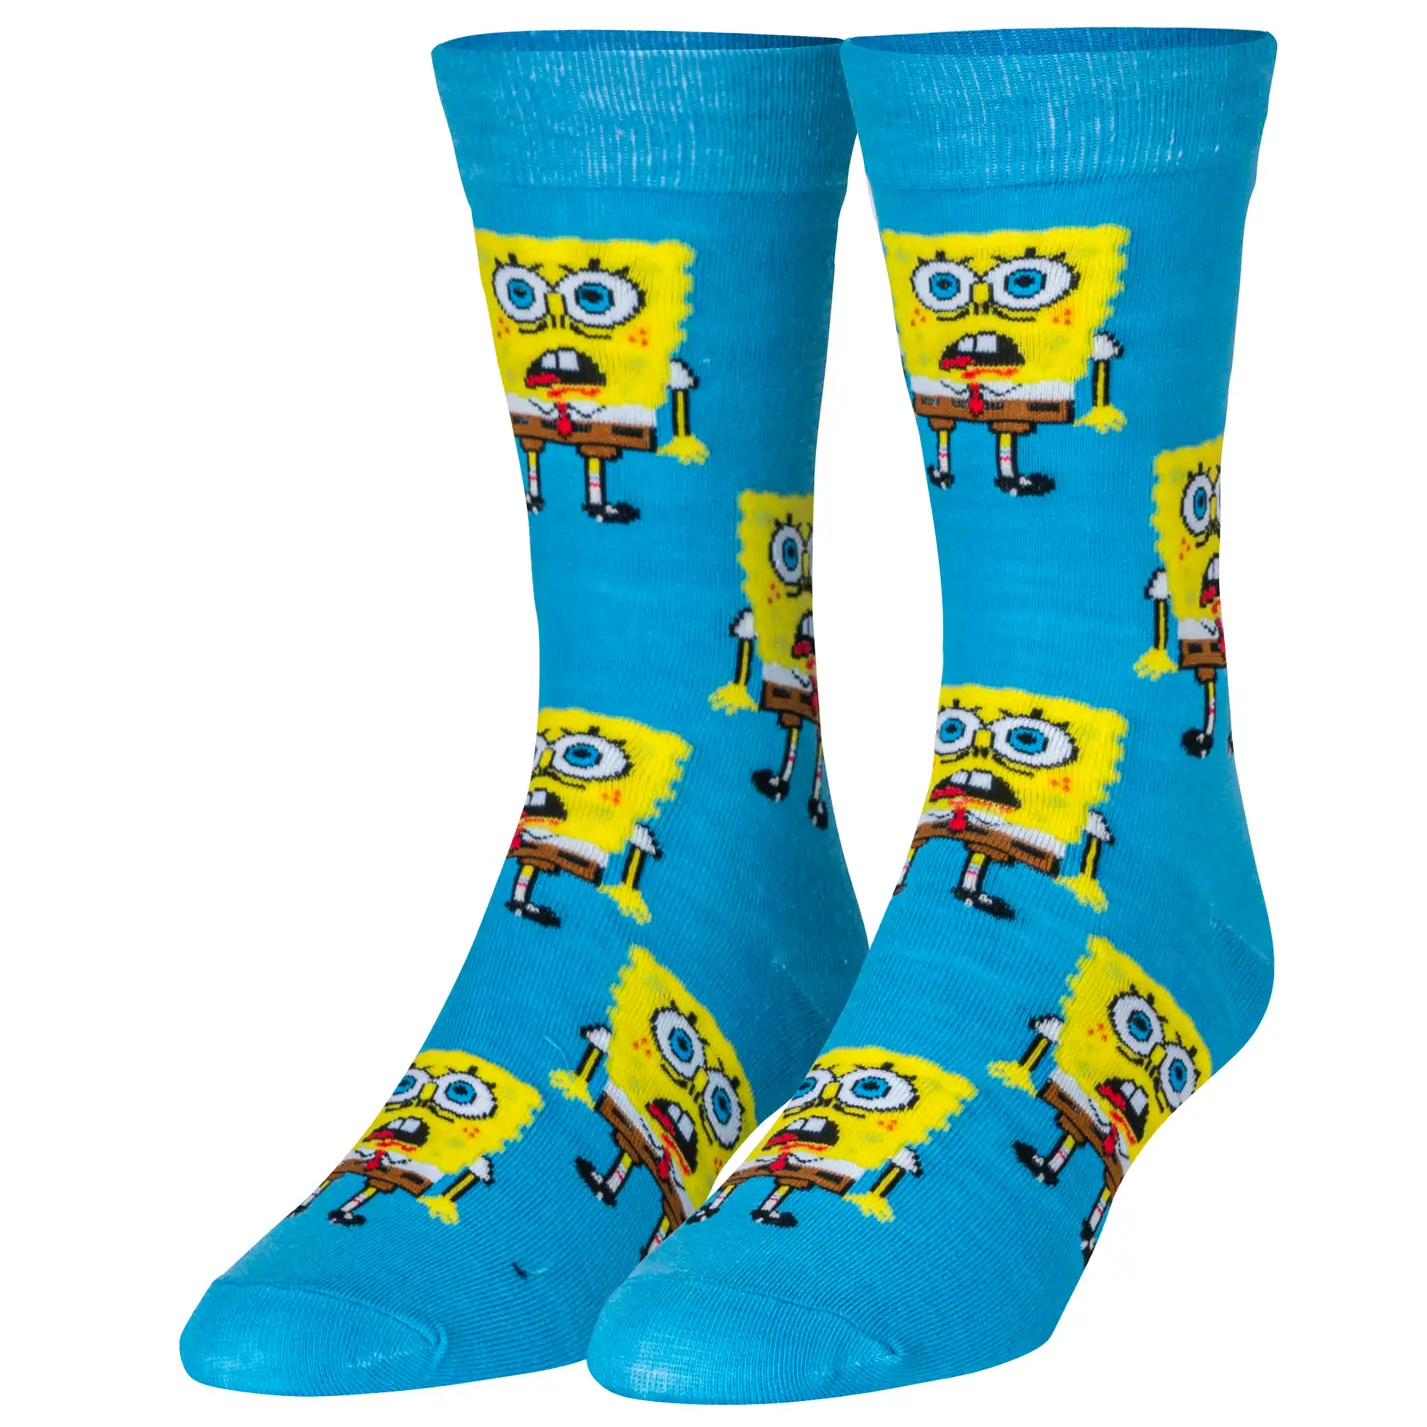 Socks - Large Crew - Spongebob